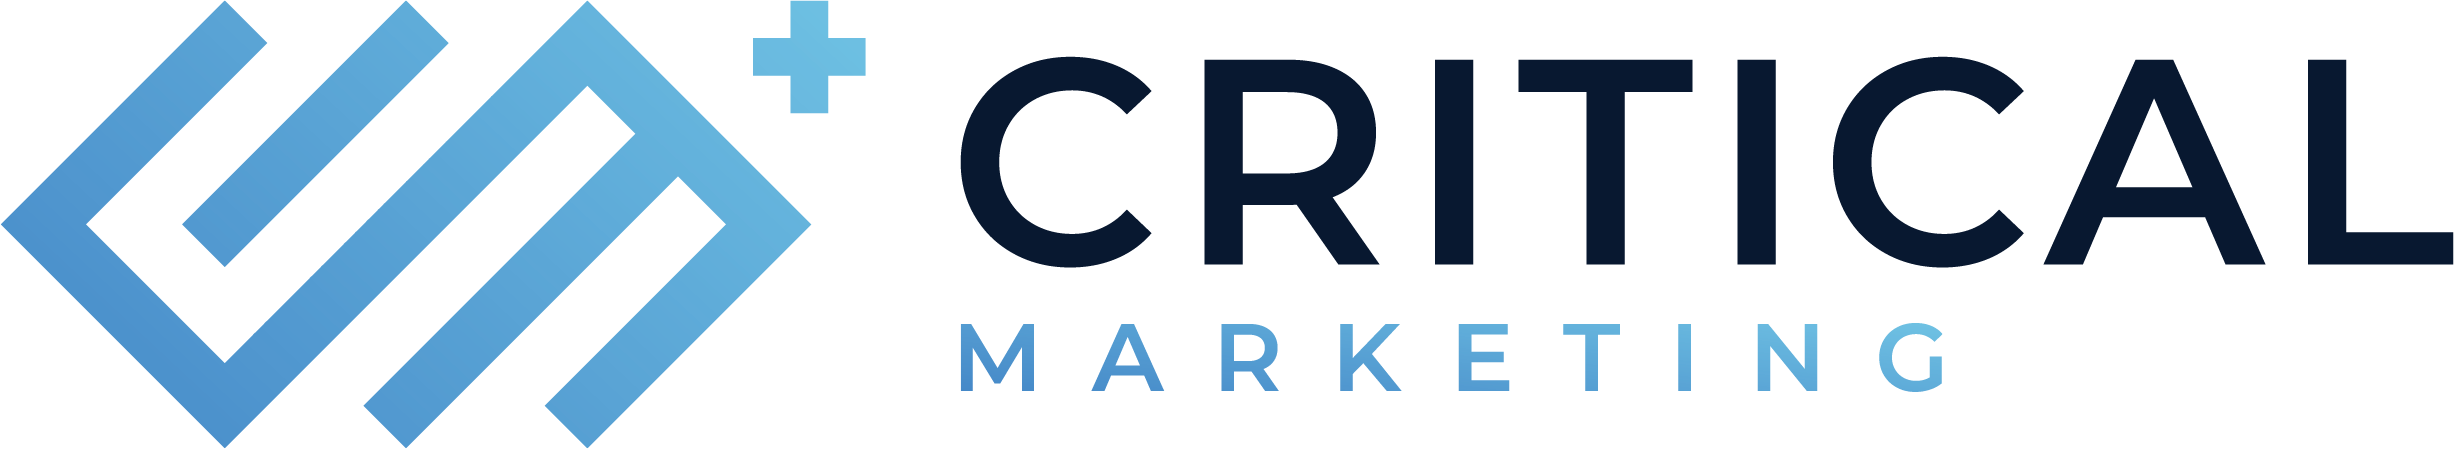 Critical Marketing Logo 